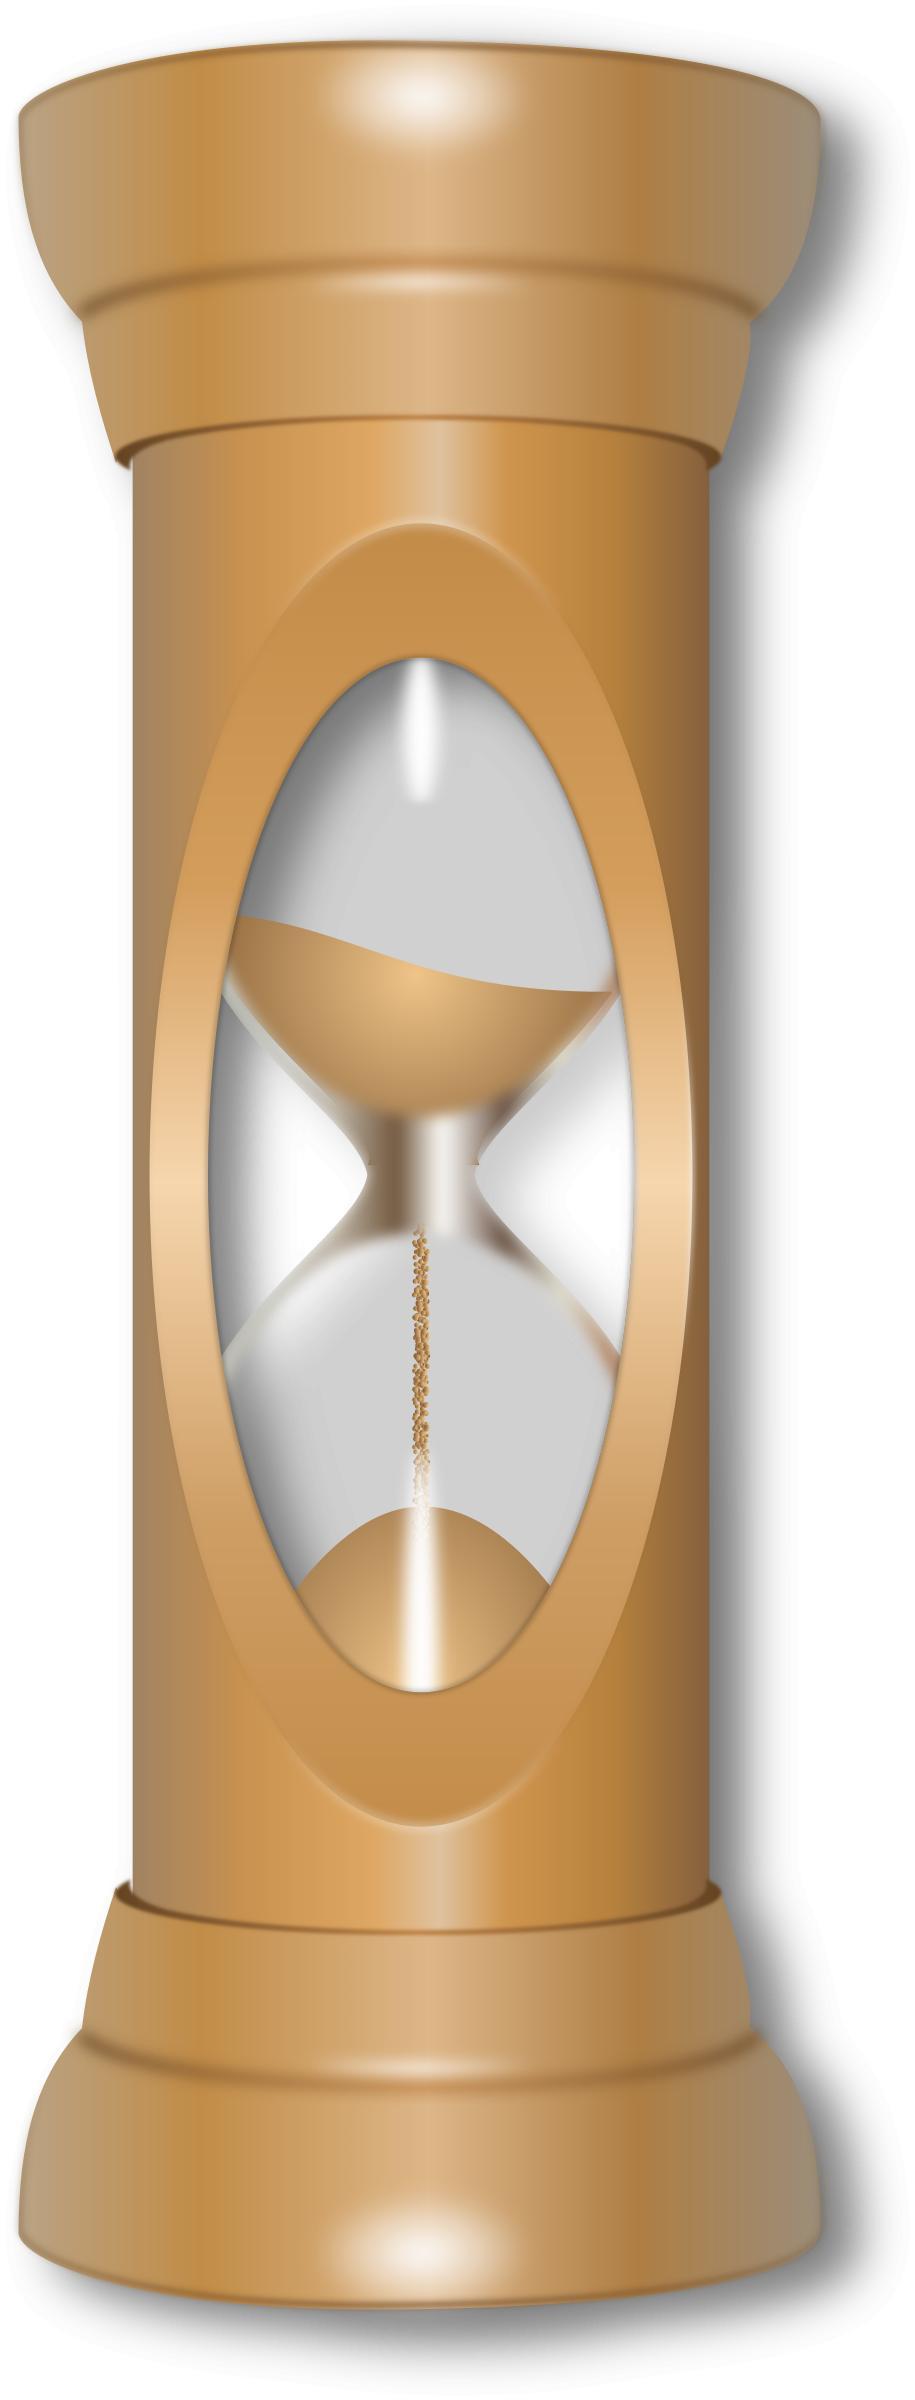 Hourglass png transparent